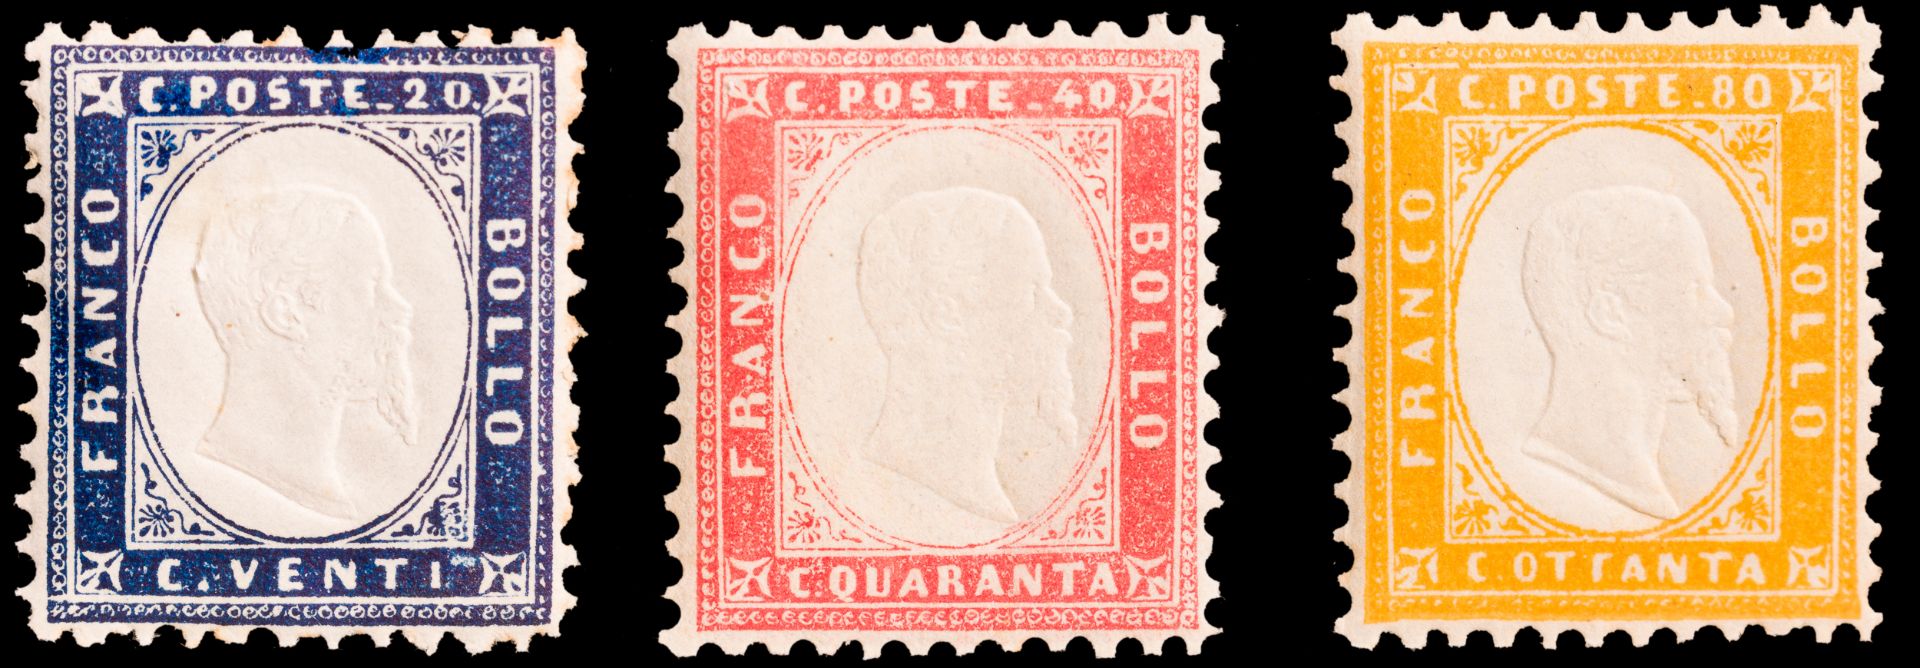 1862/1931, REGNO D'ITALIA